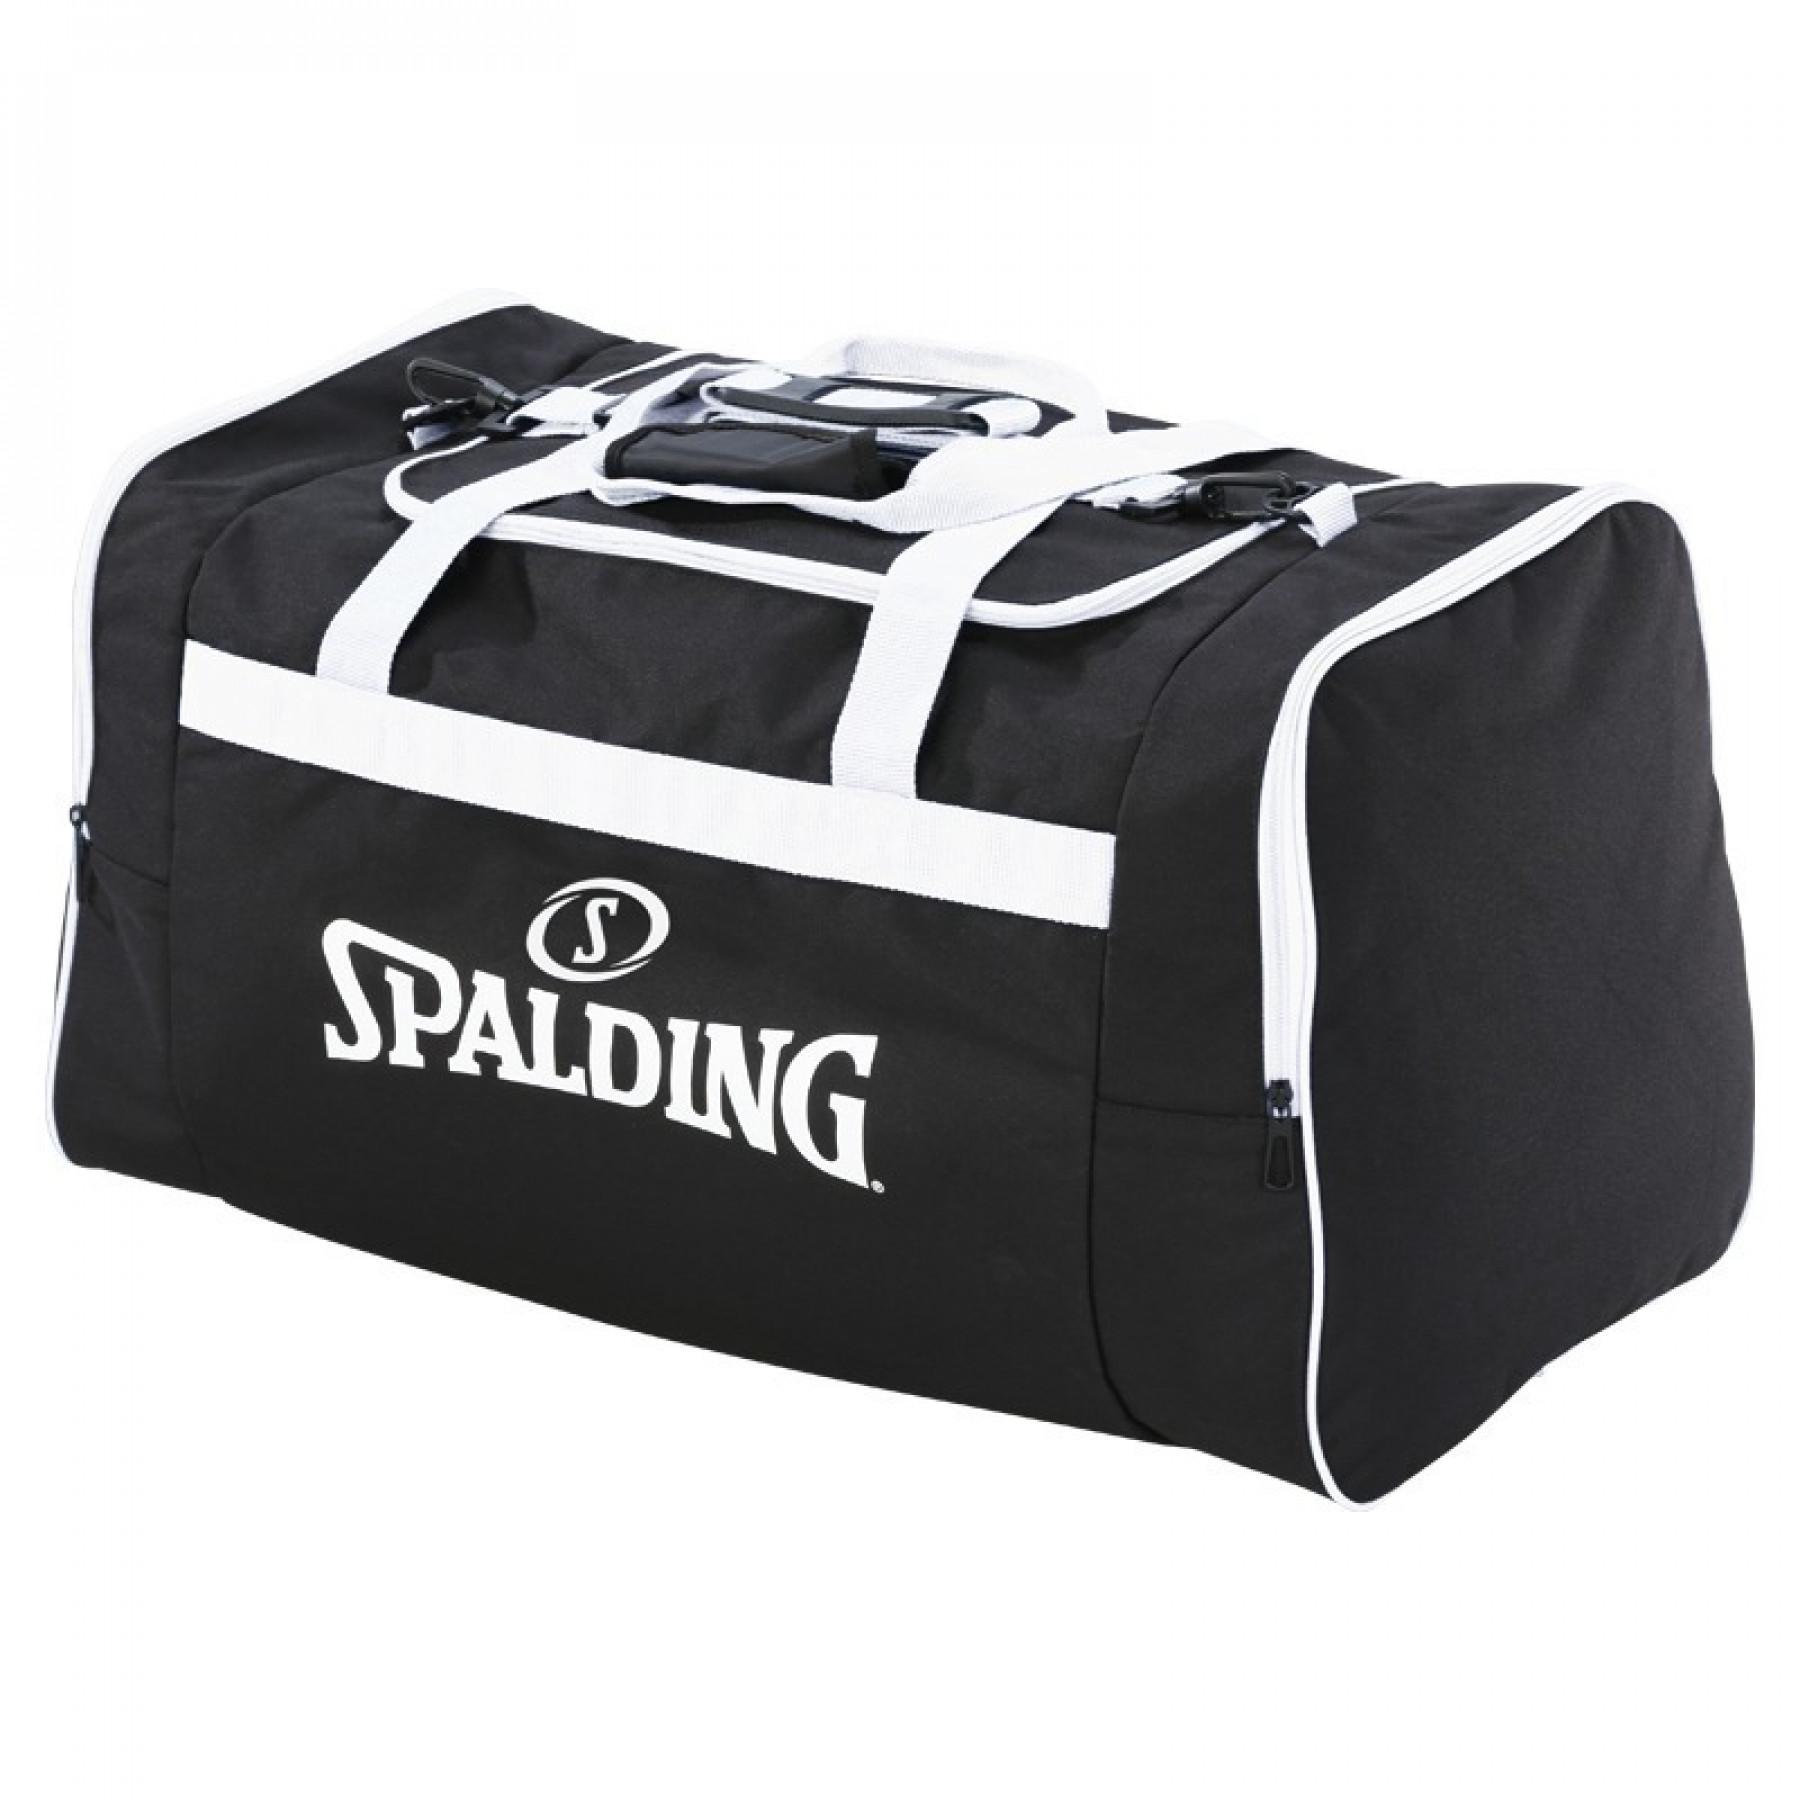 Teamtas Spalding (80 litres)